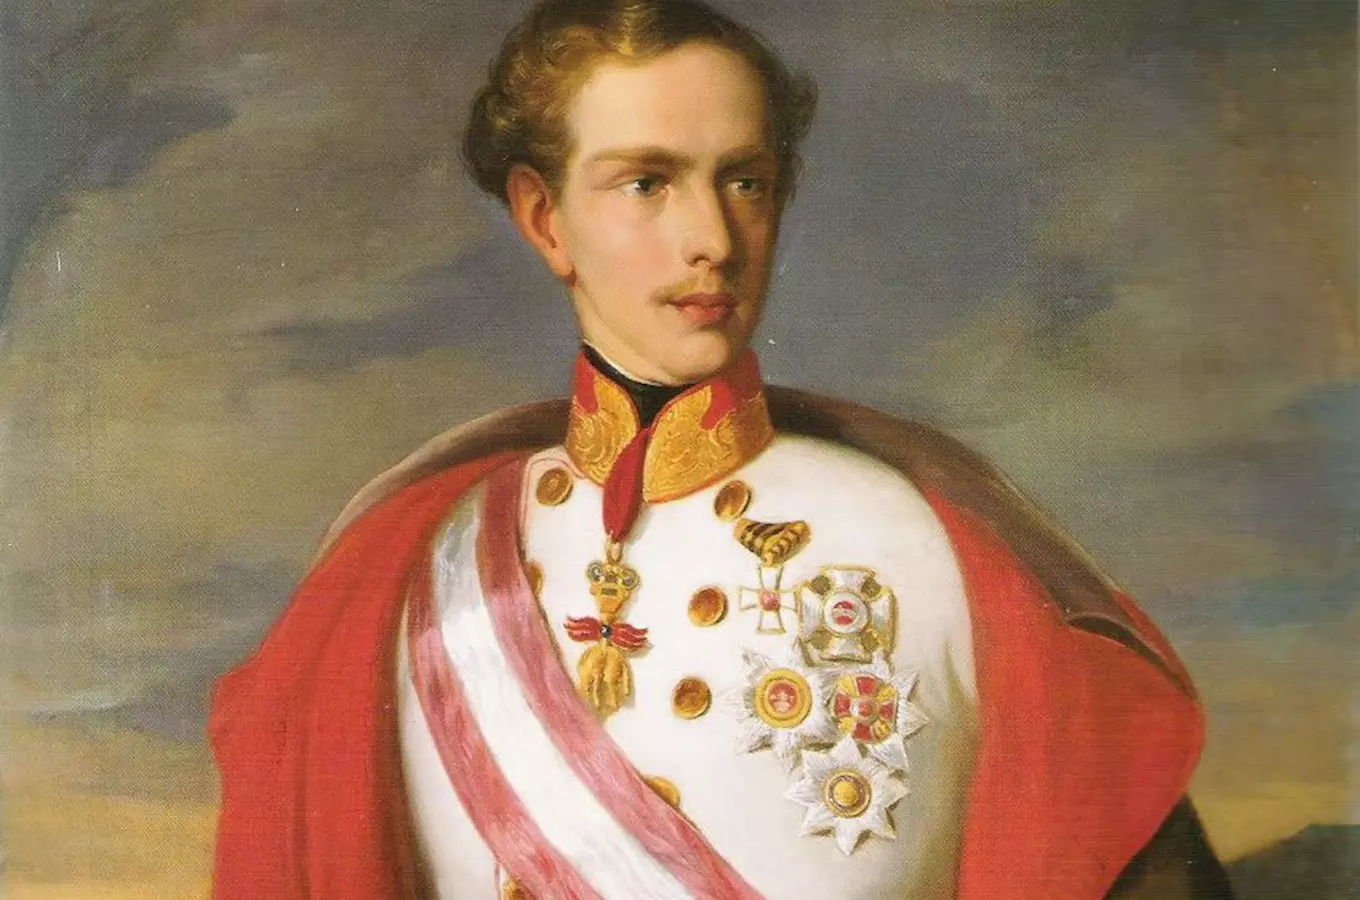 Císar František Josef I. v mládí